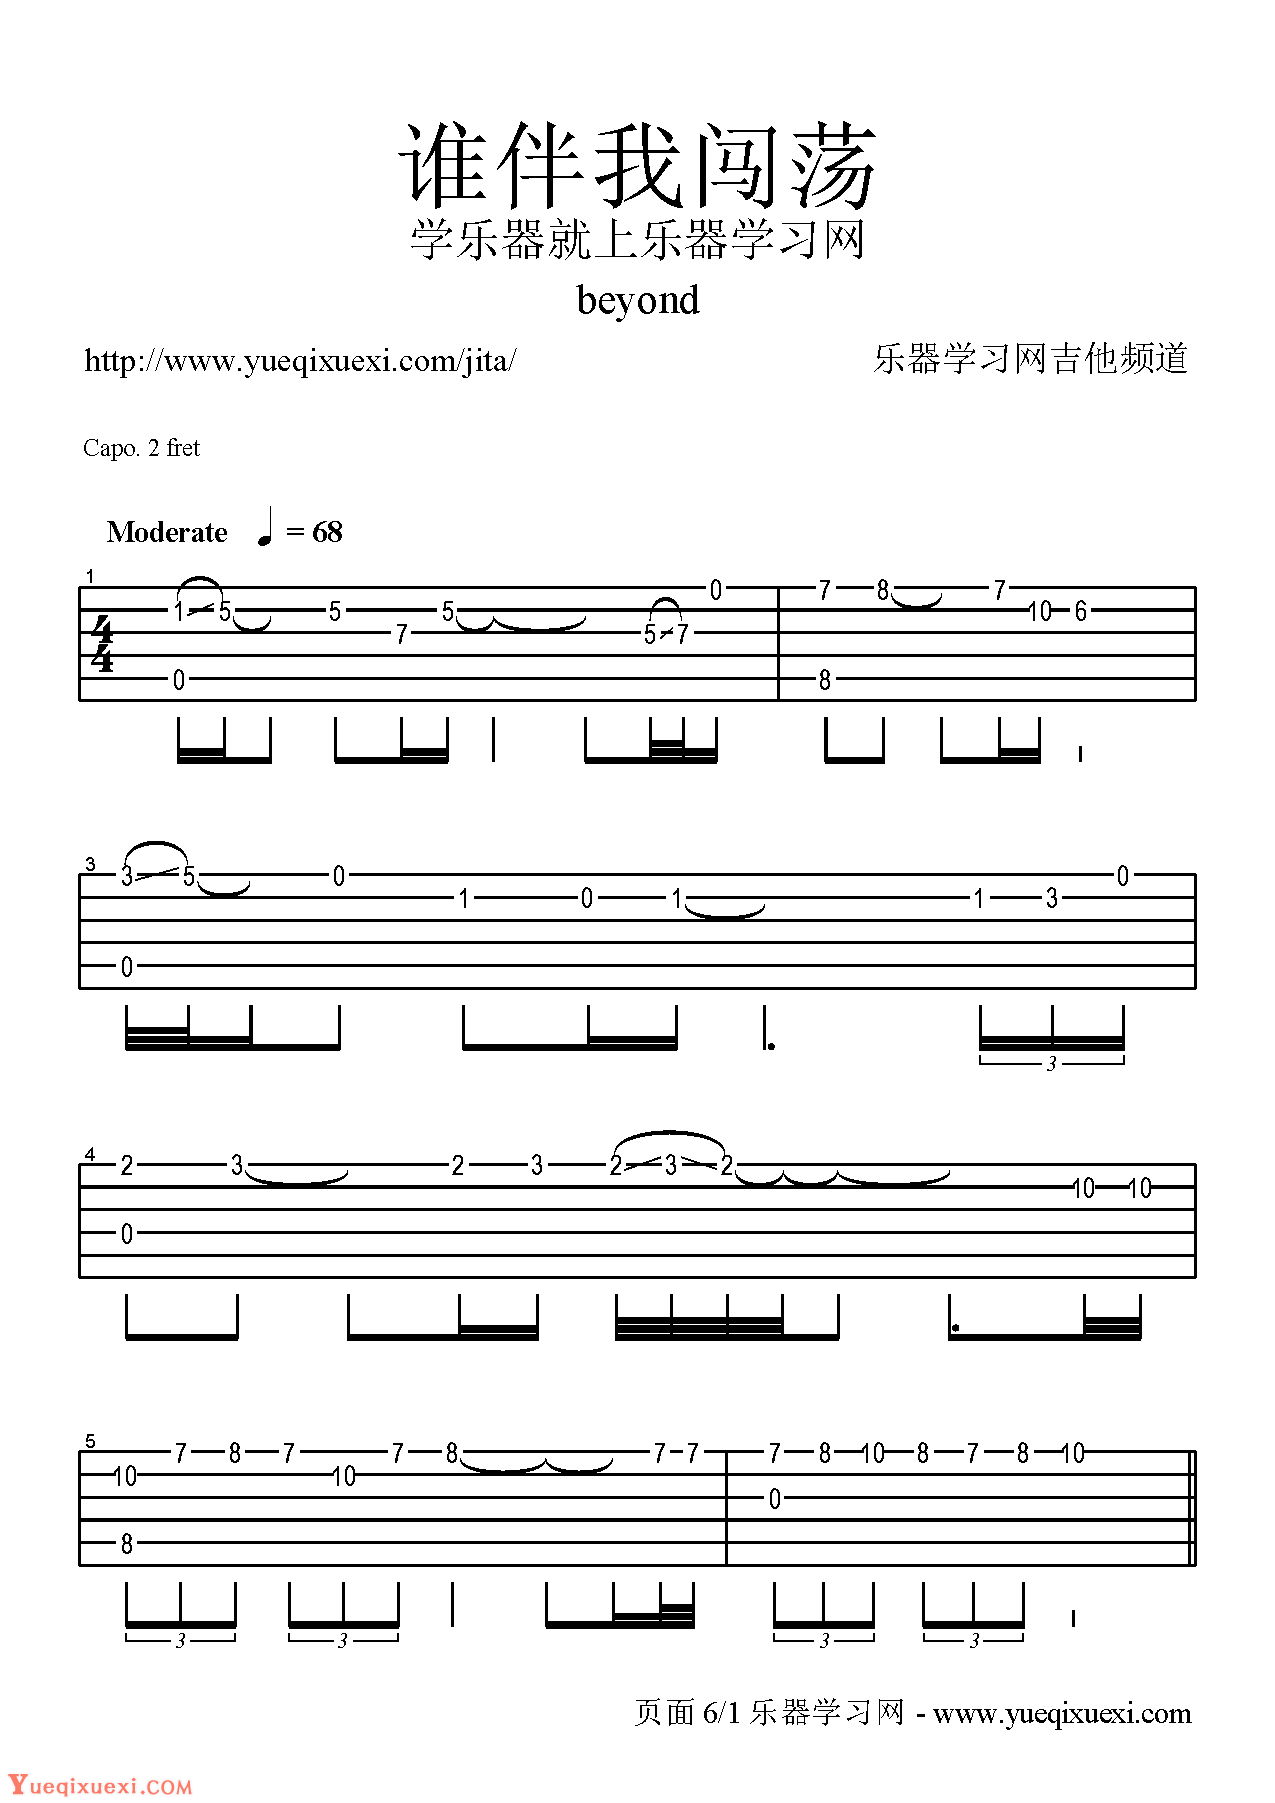 Beyond吉他谱【谁伴我闯荡】弹唱高清版-吉他曲谱 - 乐器学习网